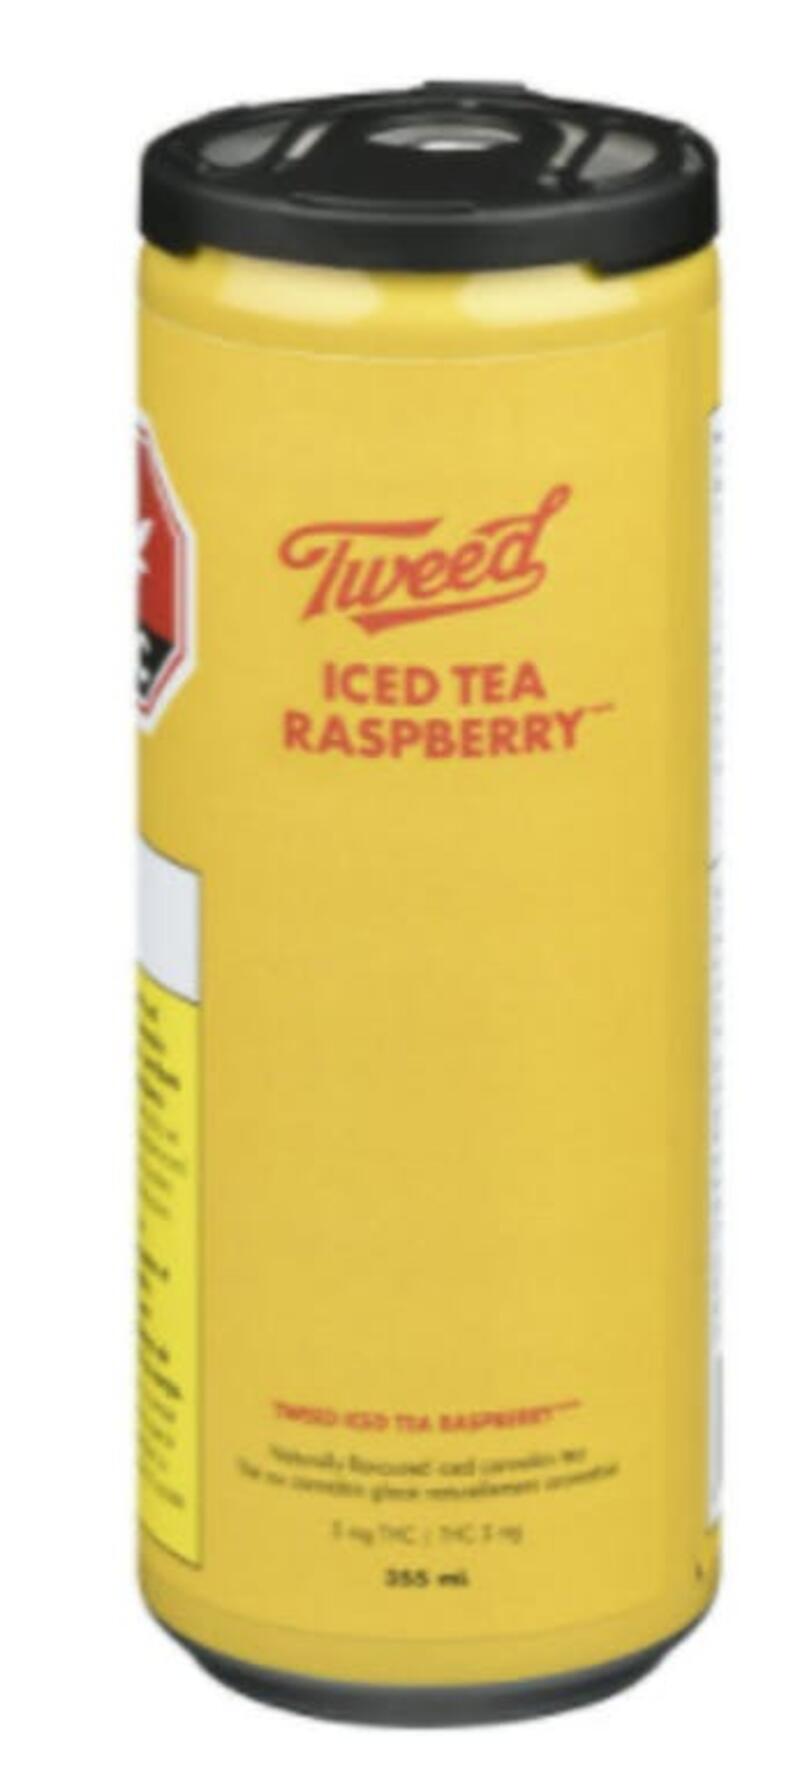 Iced Tea Raspberry by Tweed